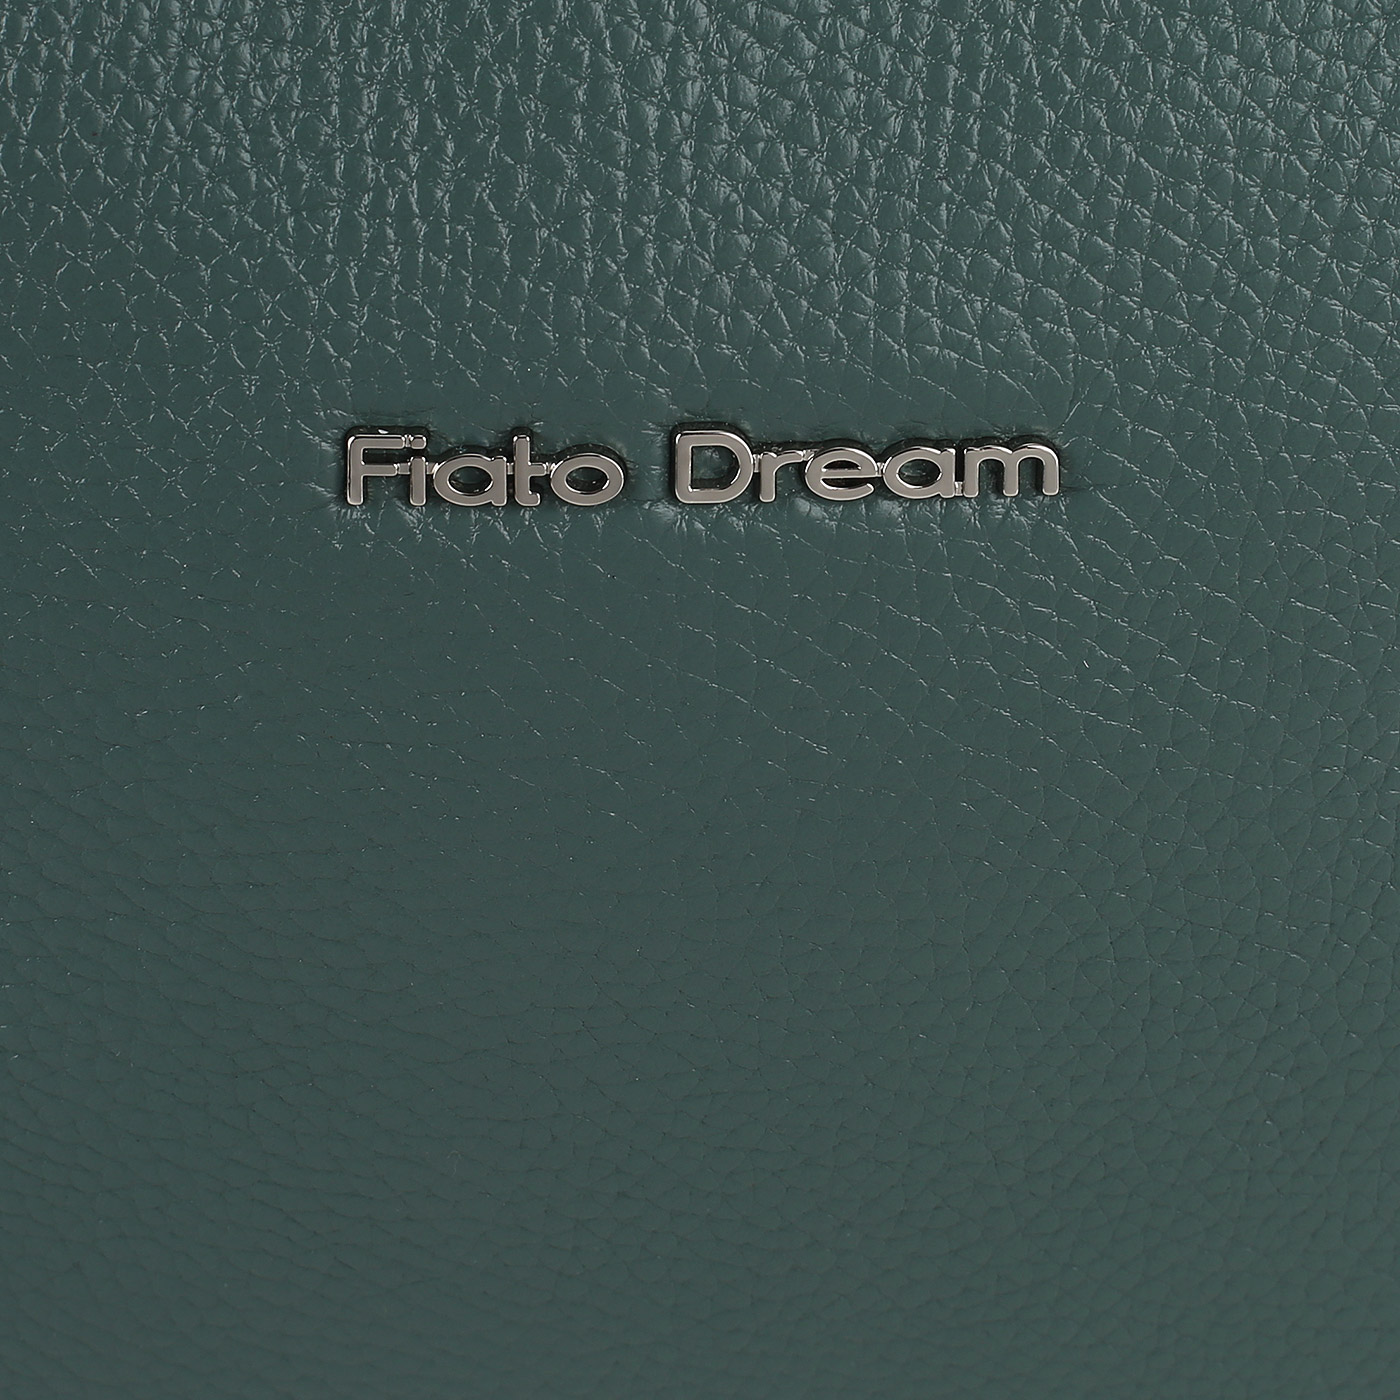 Кожаная сумка через плечо Fiato Dream 